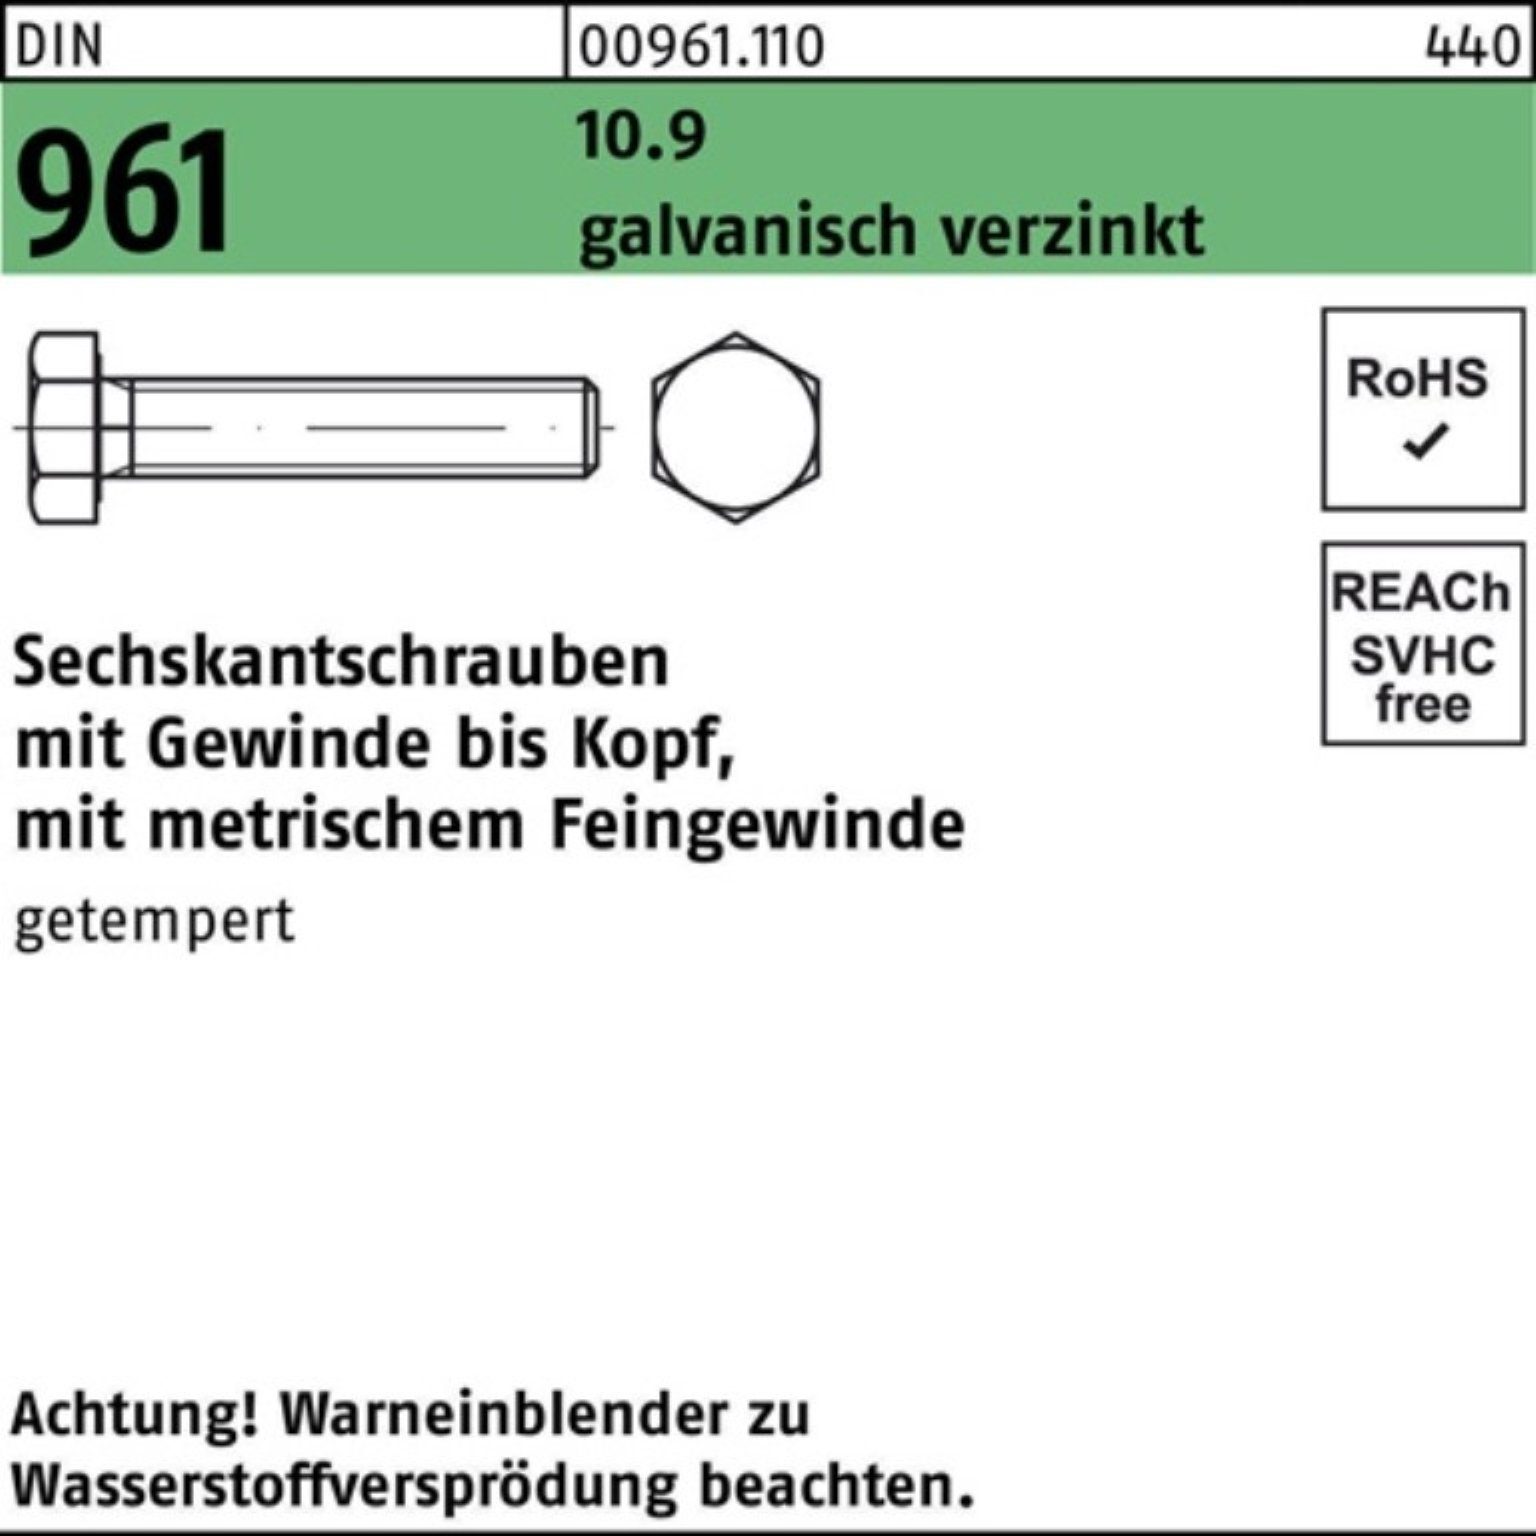 Reyher Sechskantschraube 100er Pack Sechskantschraube M20x1,5x 50 40 961 VG DIN galv.verz. 10.9